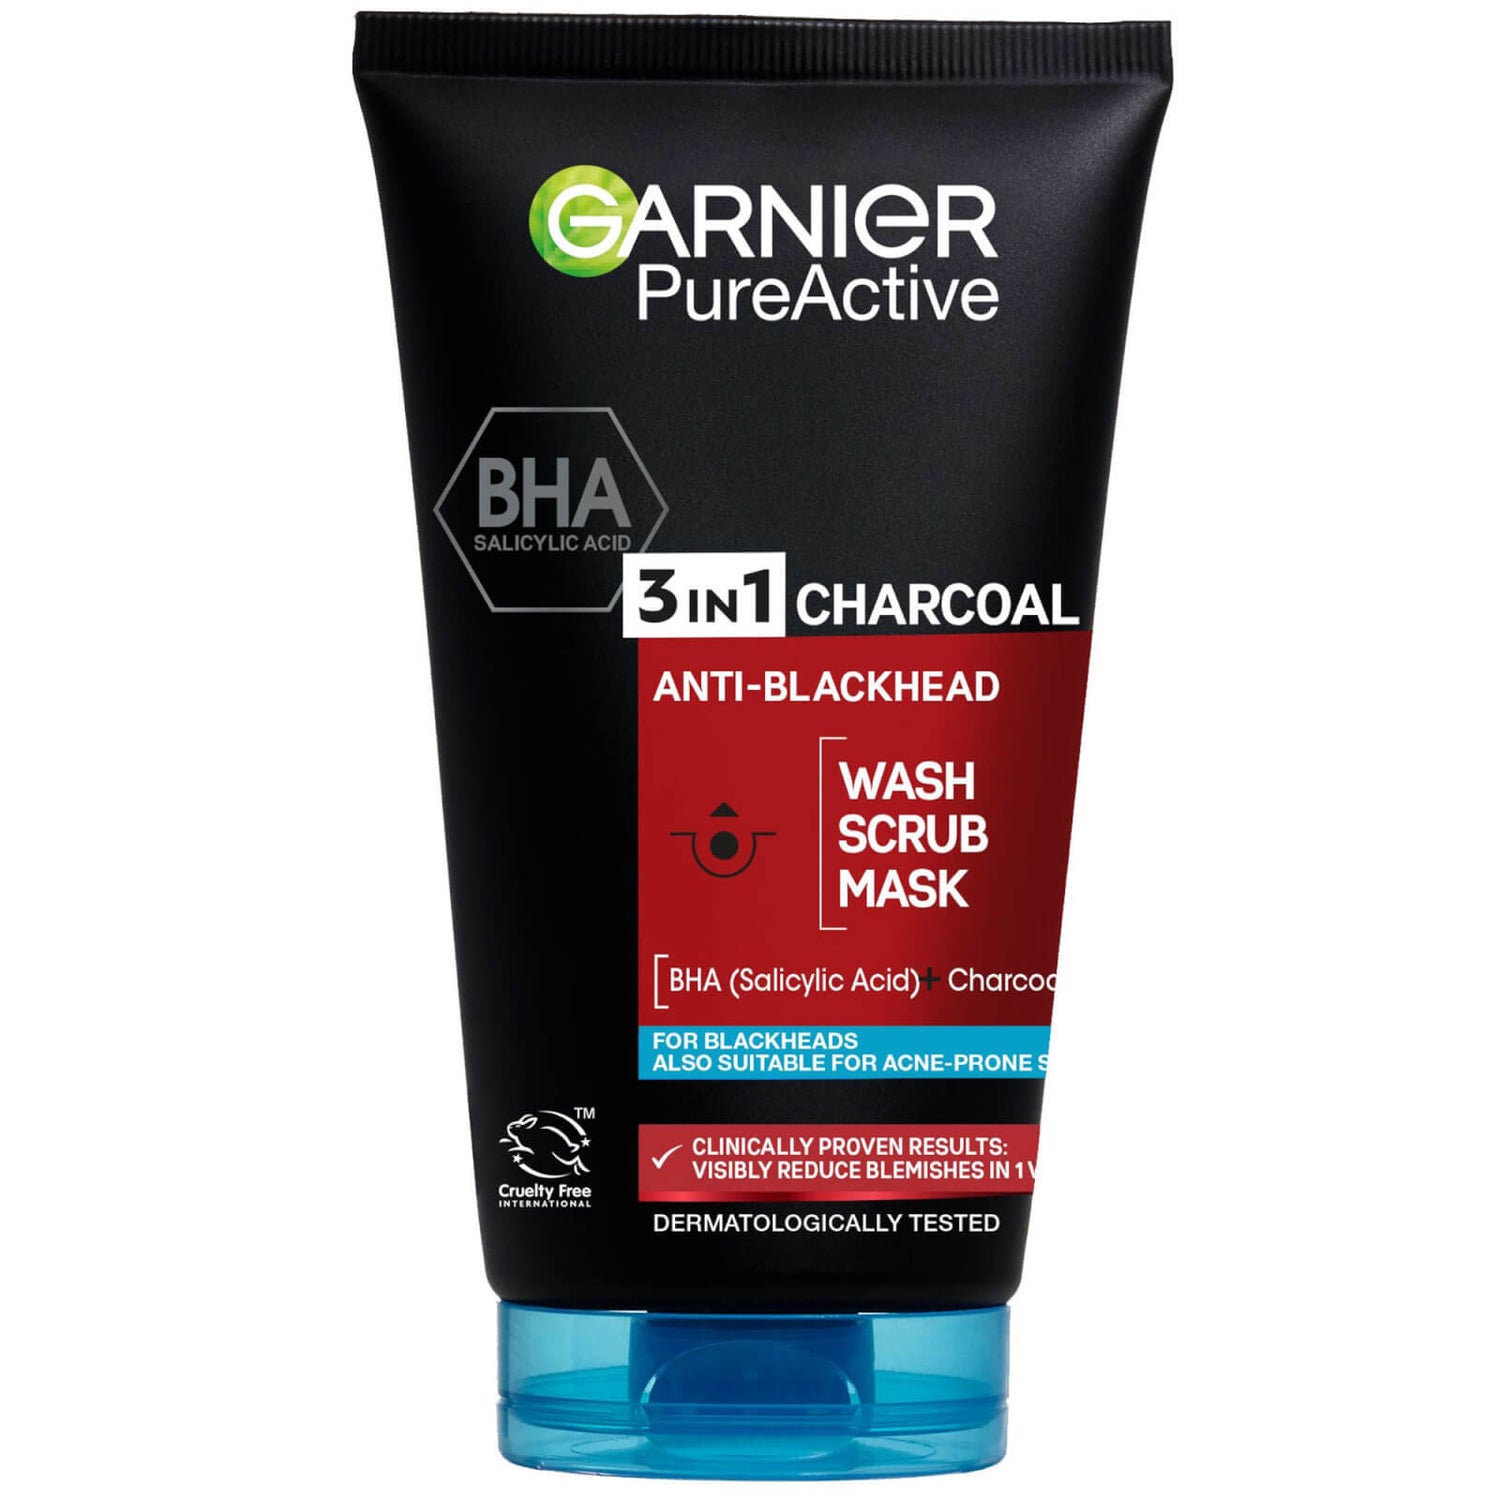 Garnier Pure Active Intensive 3 in 1 Anti-Blackhead Charcoal Wash